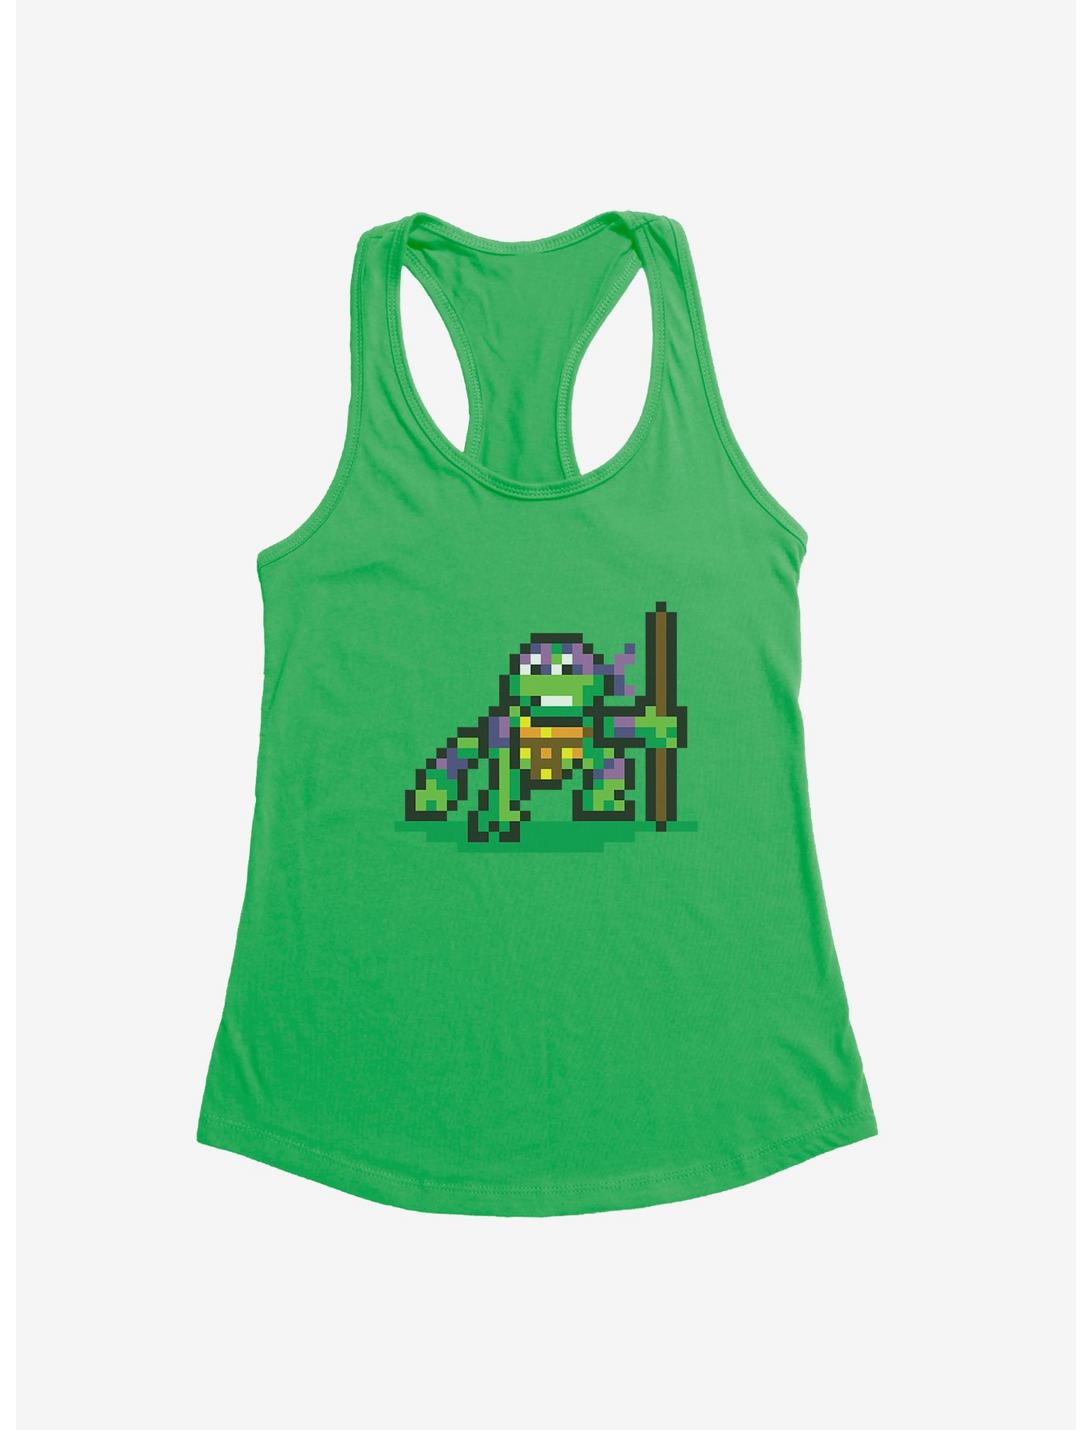 Teenage Mutant Ninja Turtles Boy's Tank Top Shirt NWT Blue  Green   Size  7